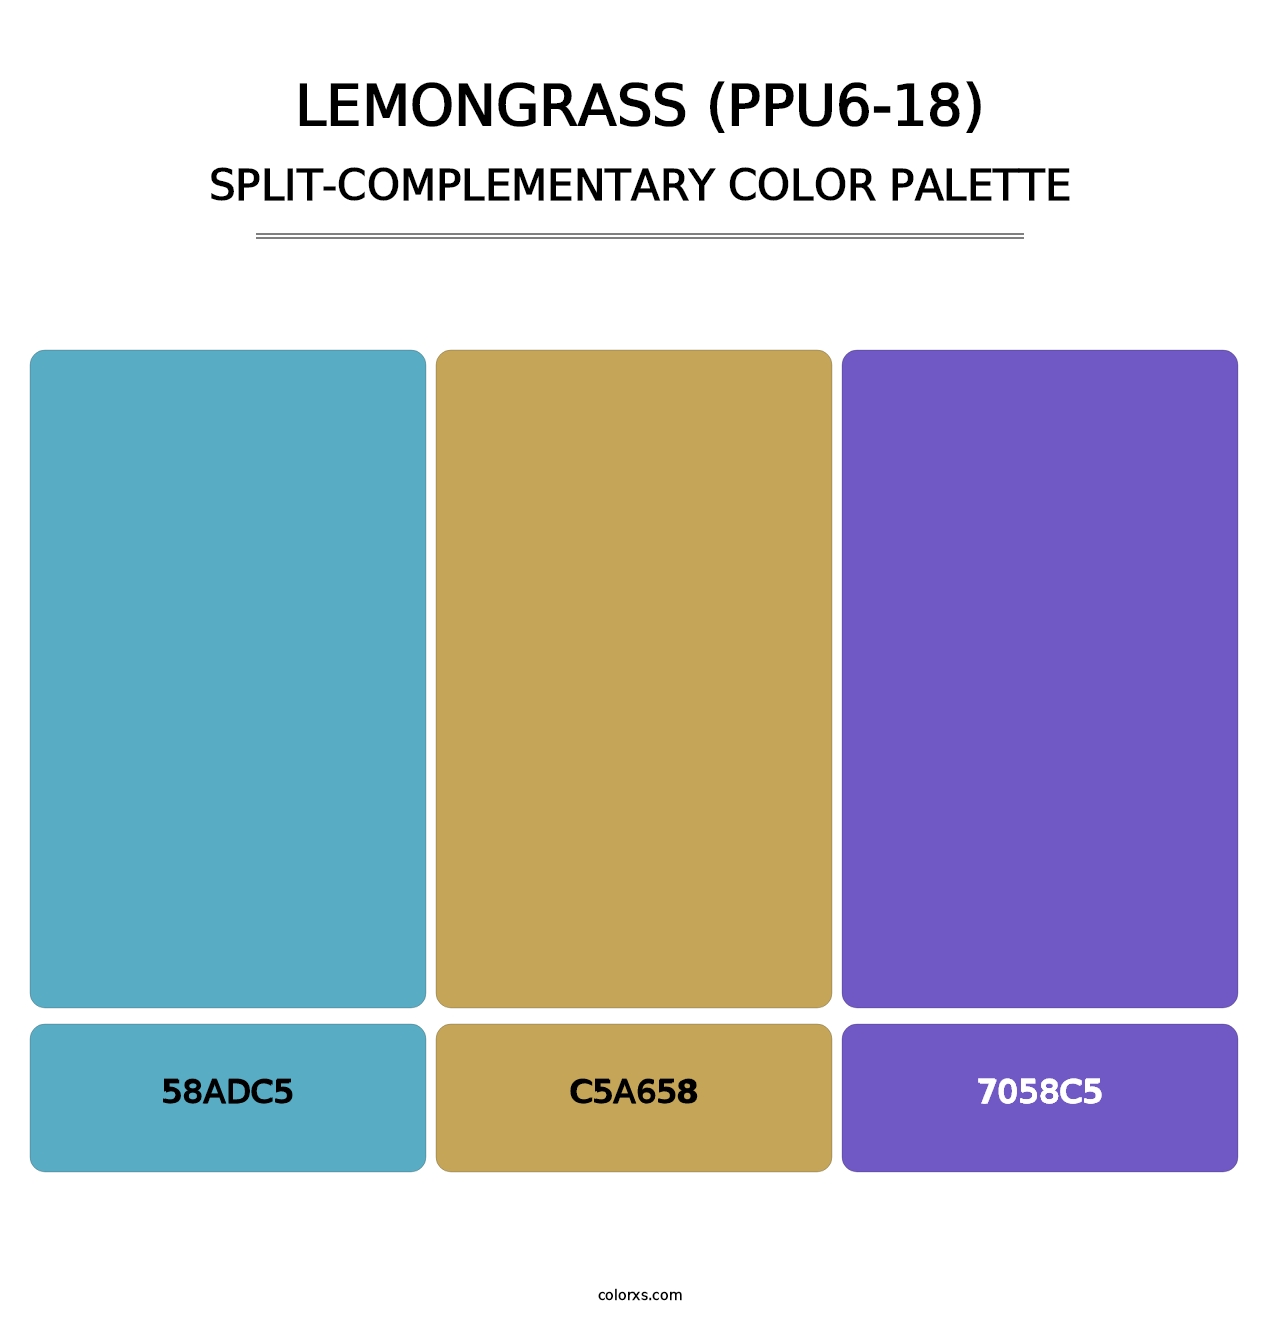 Lemongrass (PPU6-18) - Split-Complementary Color Palette